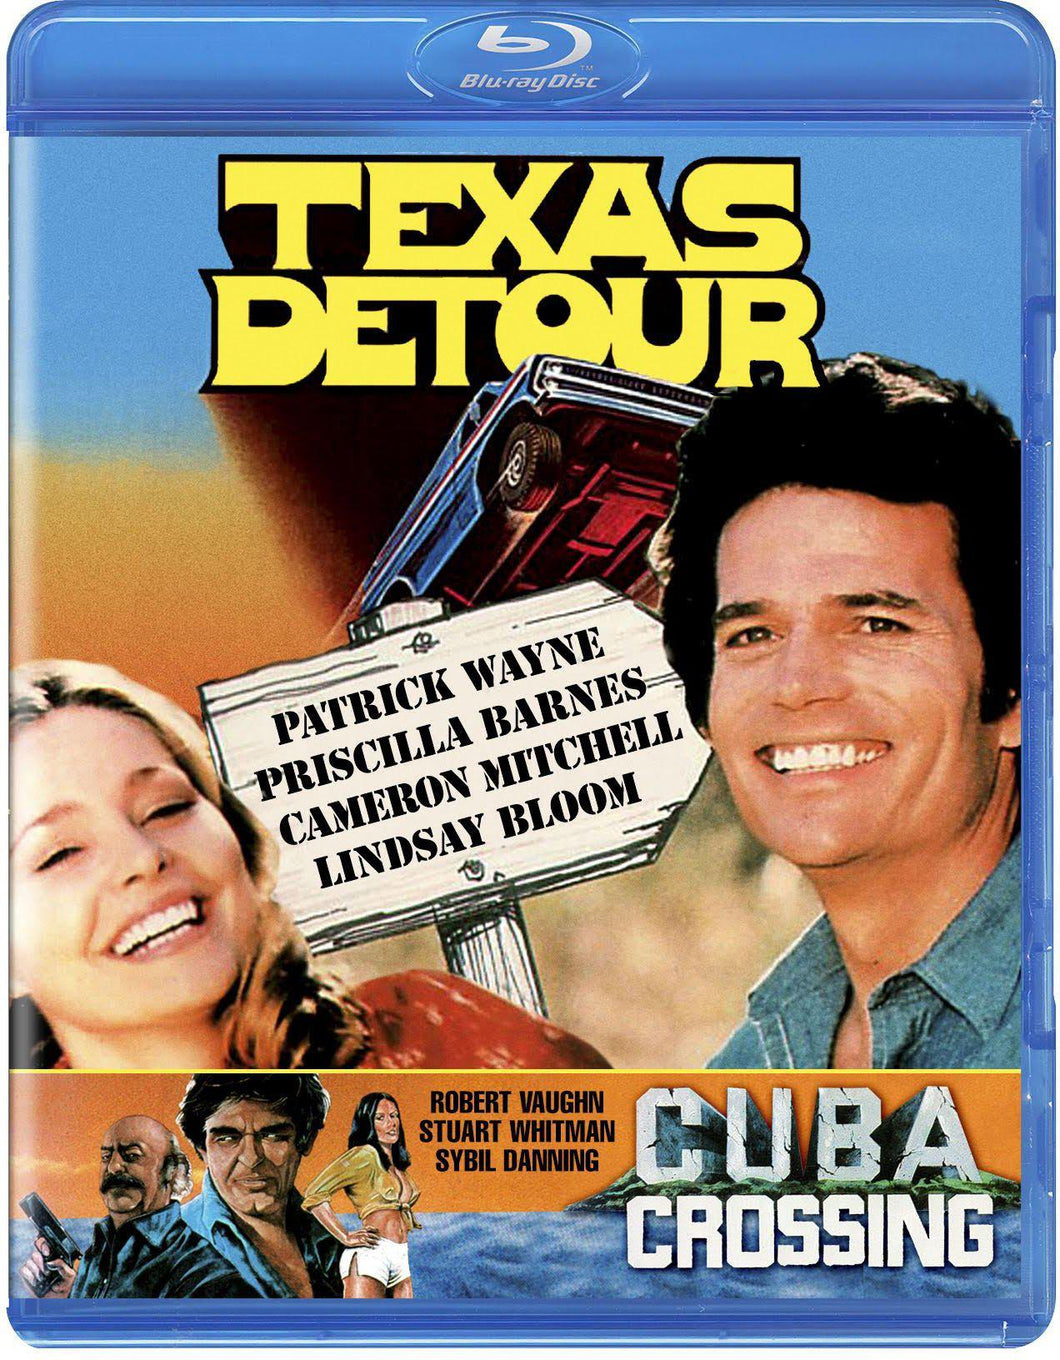 Texas Detour / Cuba Crossing (Blu-ray): Ronin Flix